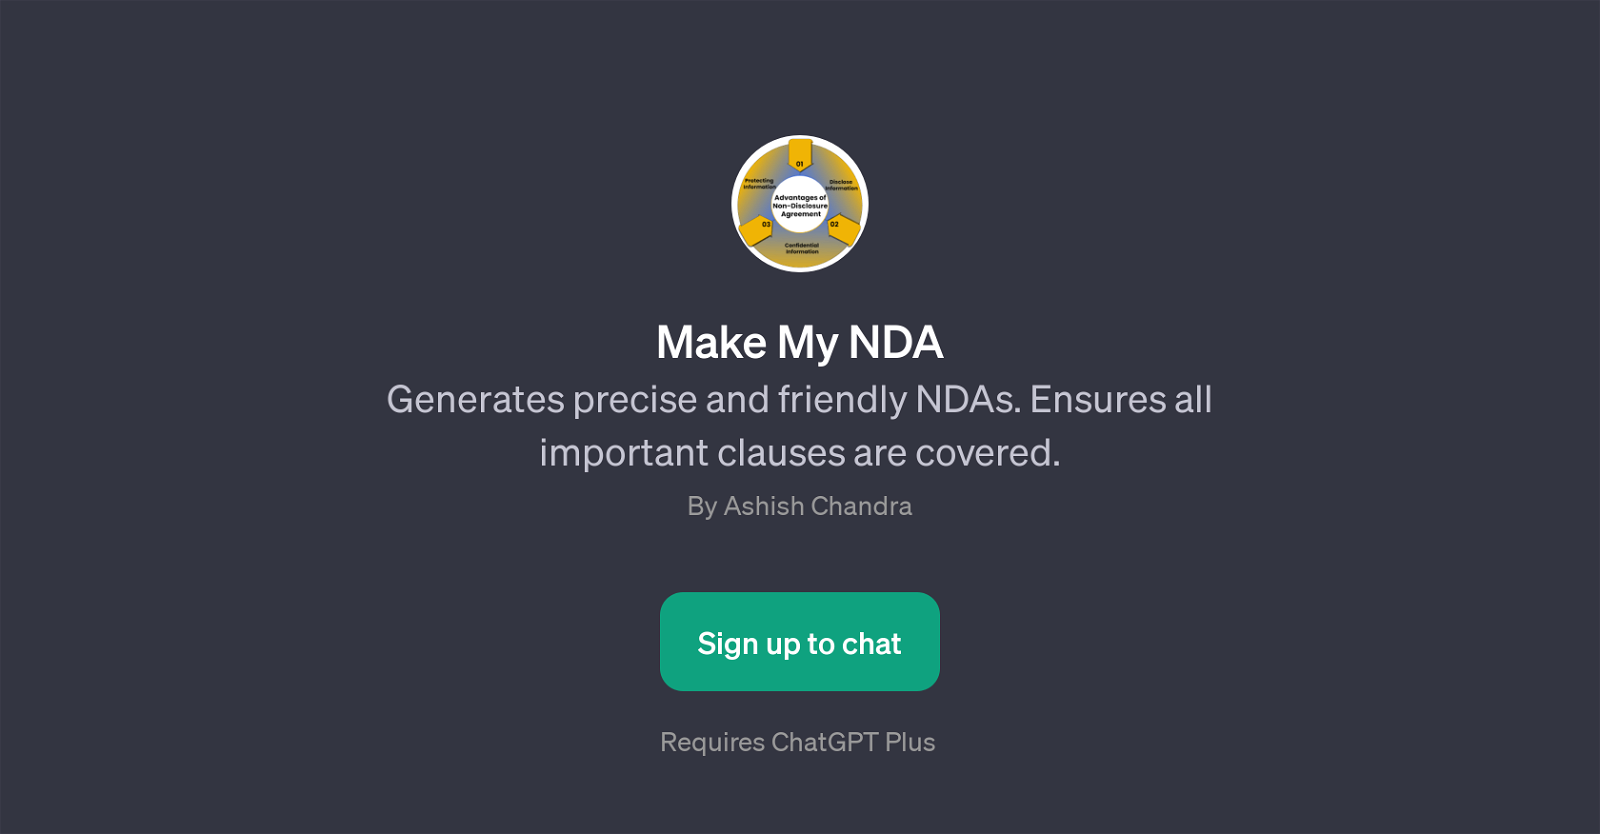 Make My NDA website